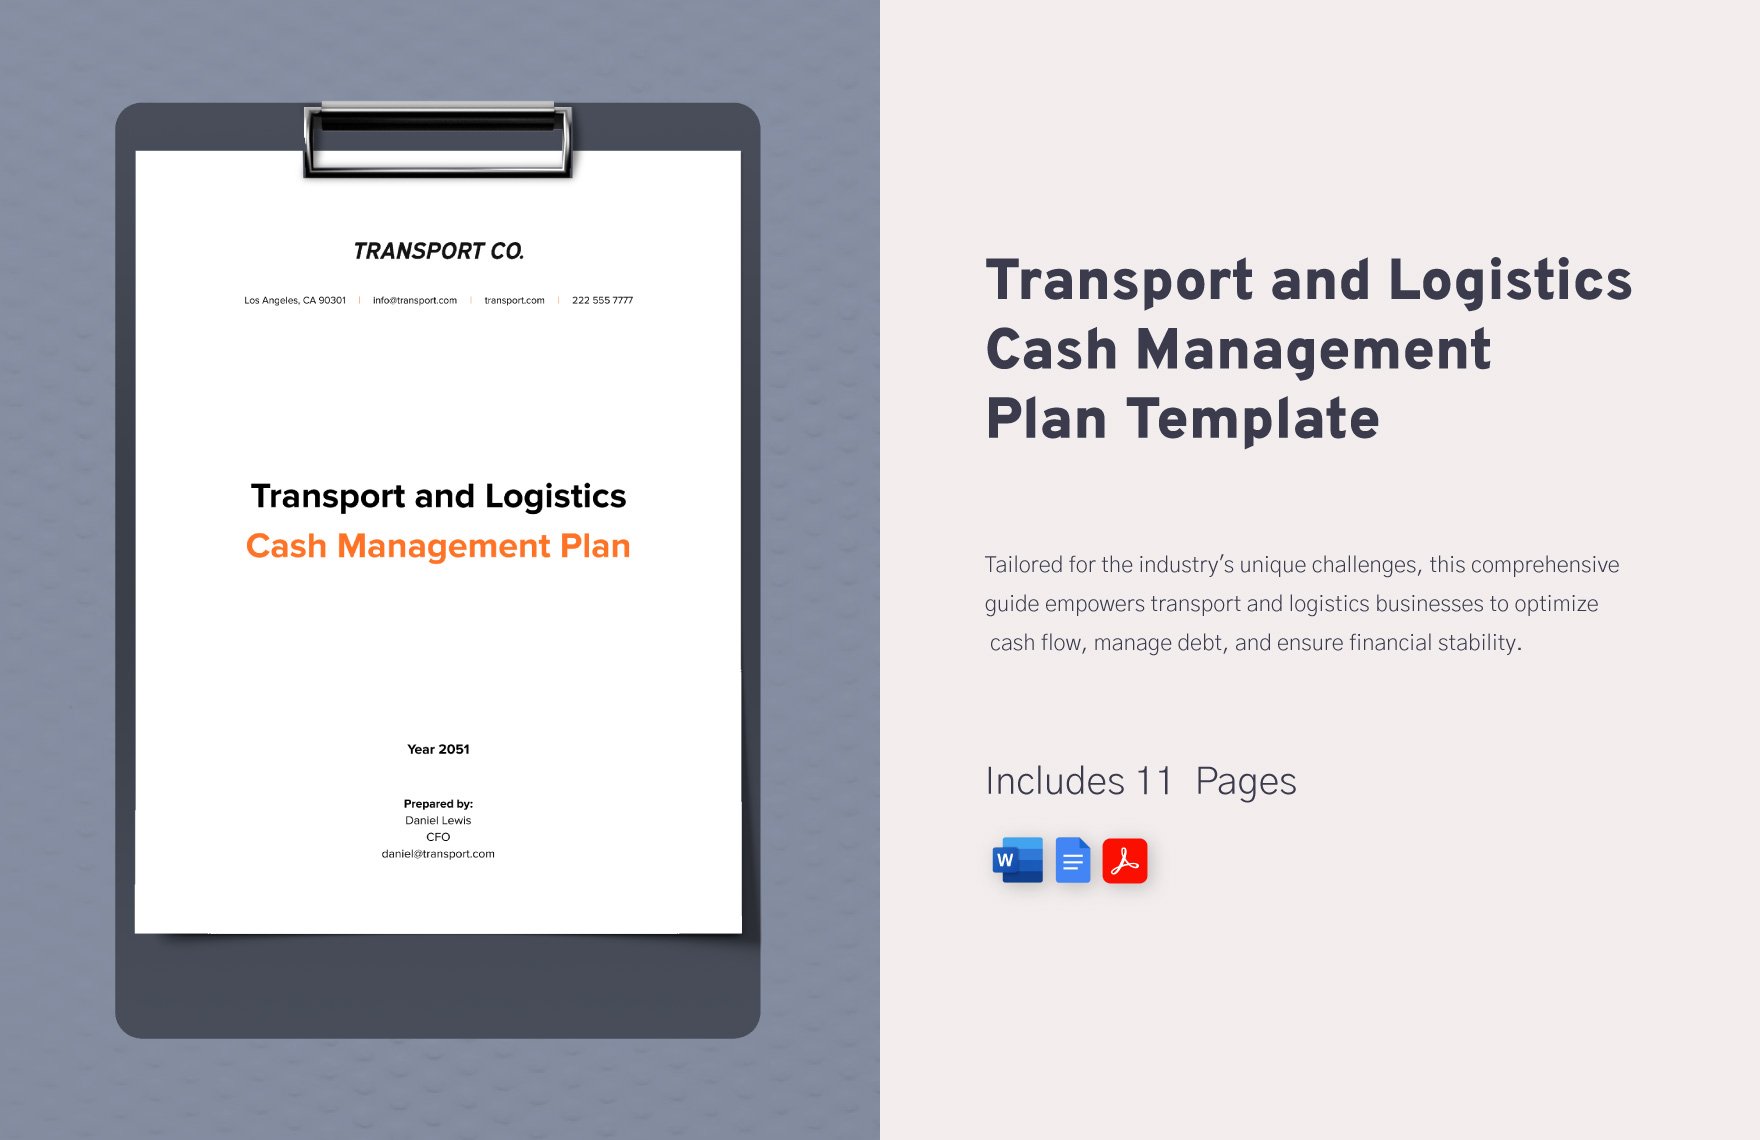 Transport and Logistics Cash Management Plan Template